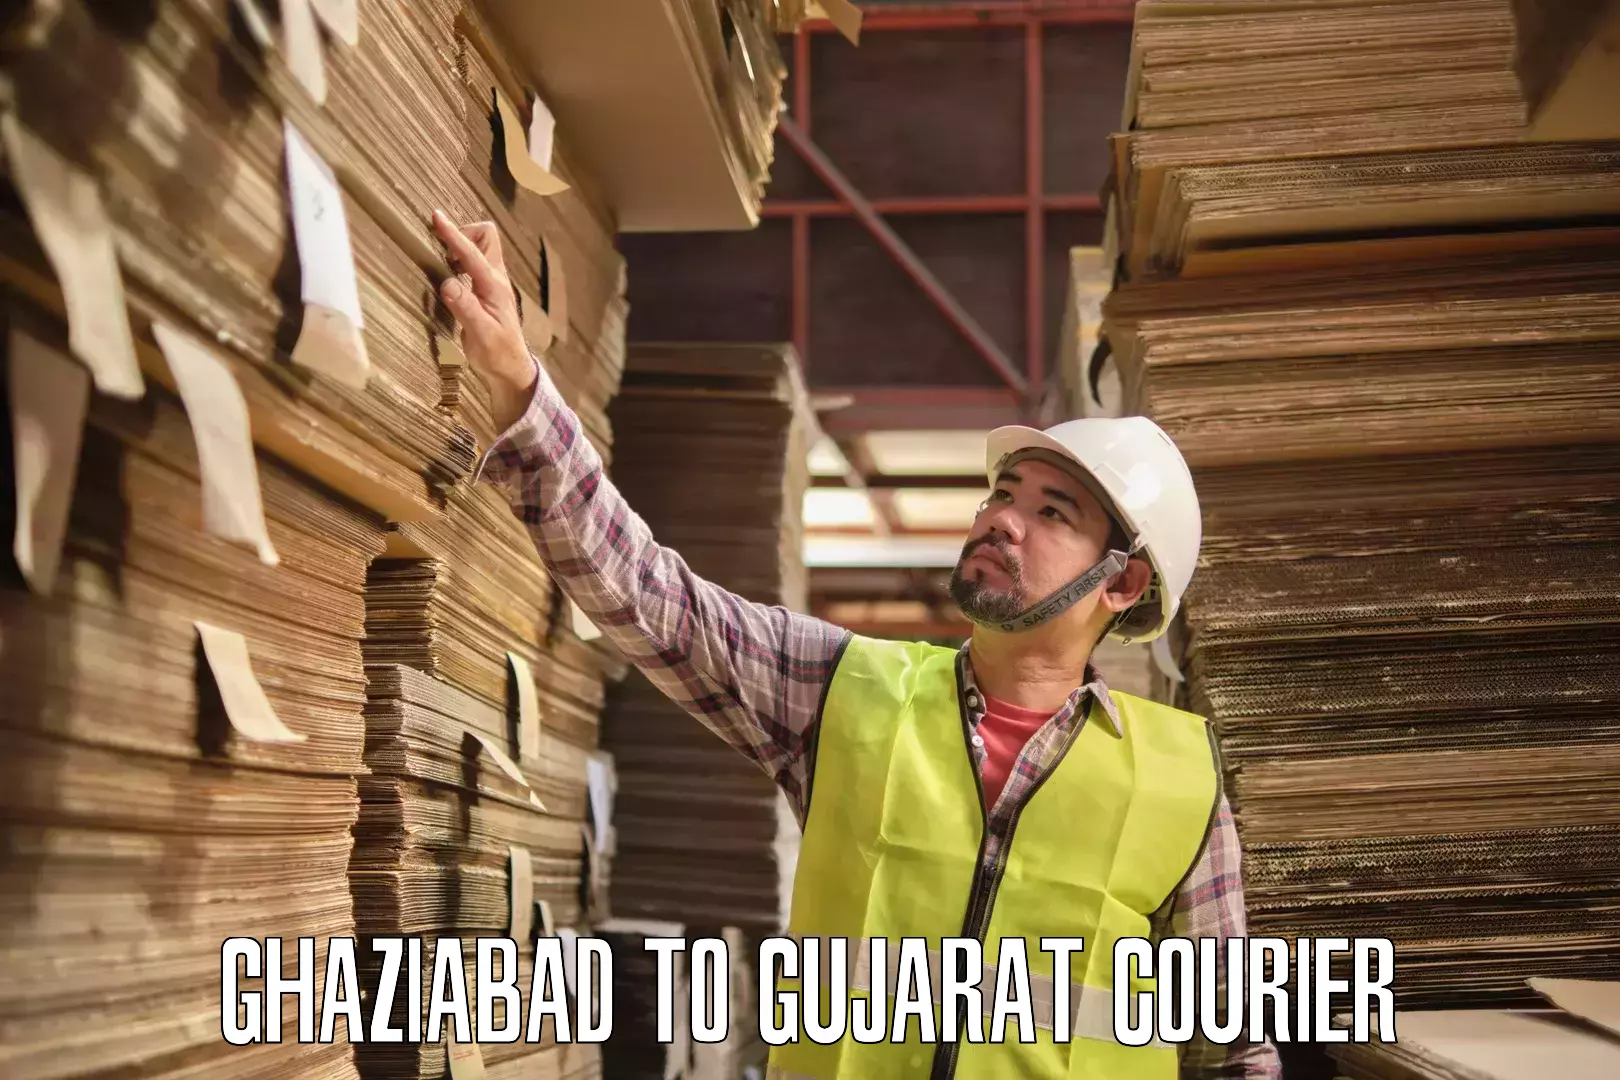 Courier service comparison Ghaziabad to IIIT Surat